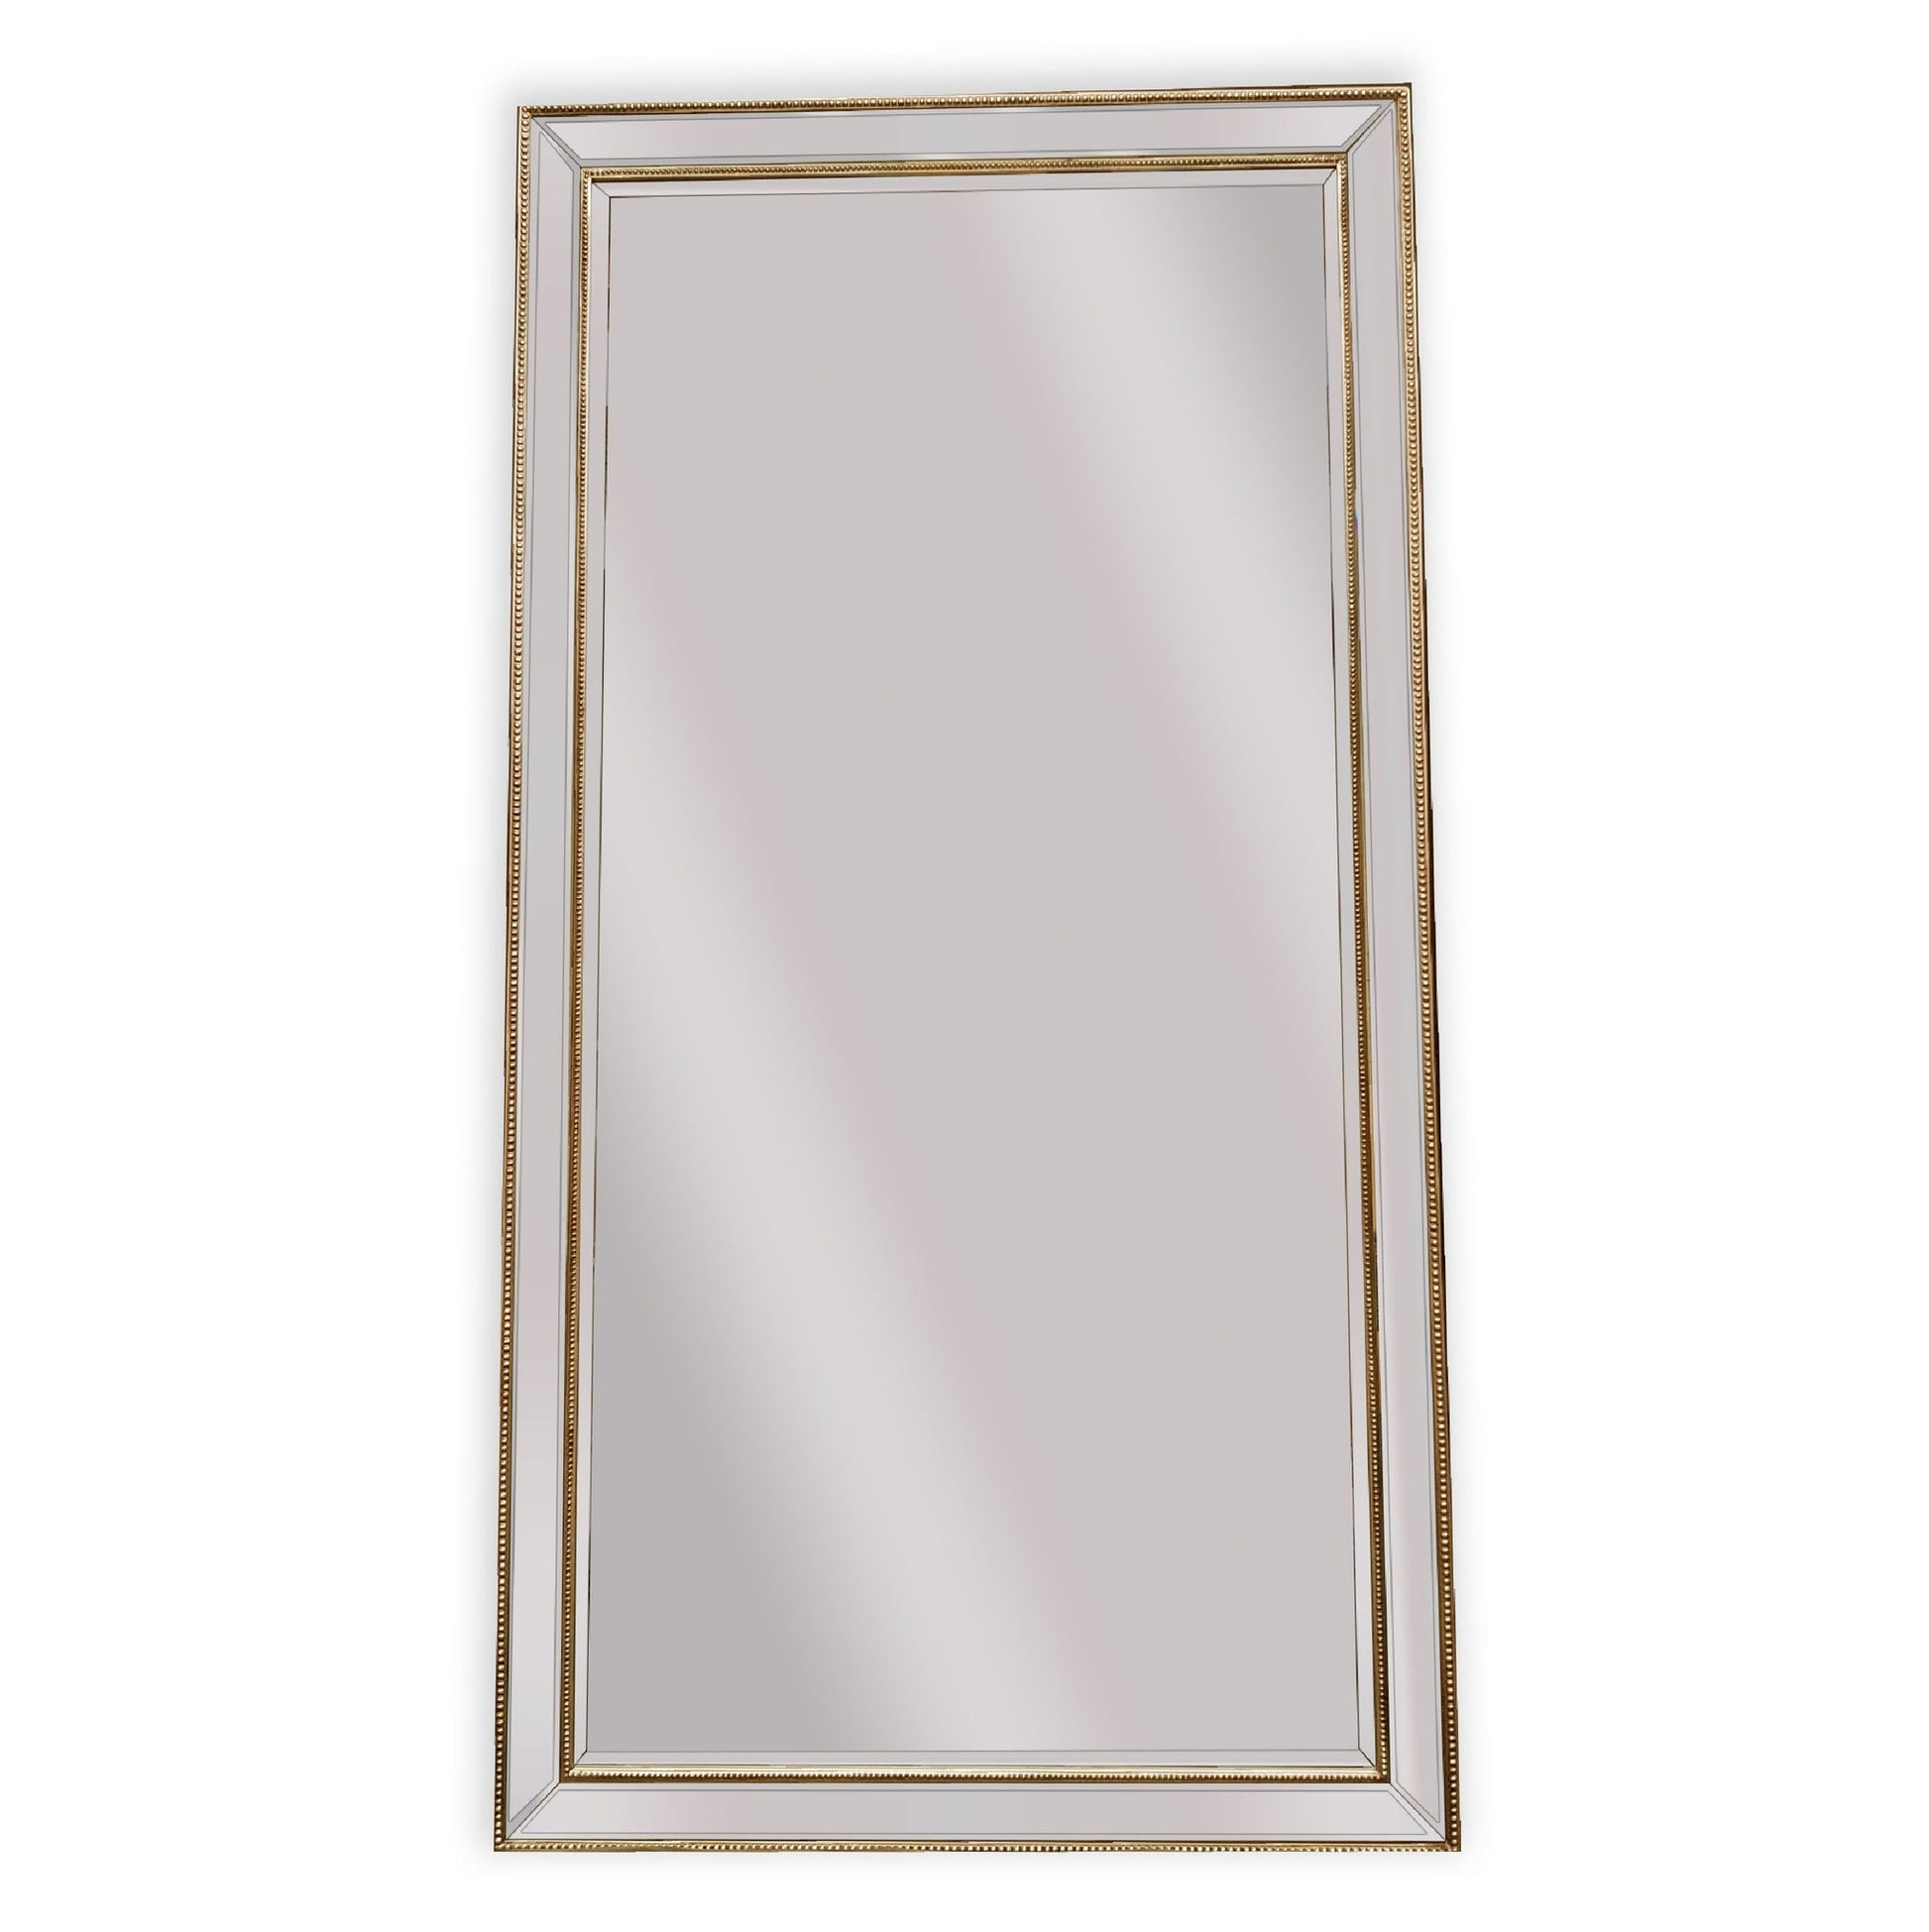 Gold Beaded Framed Mirror - X Large 190cm x 100cm - image1